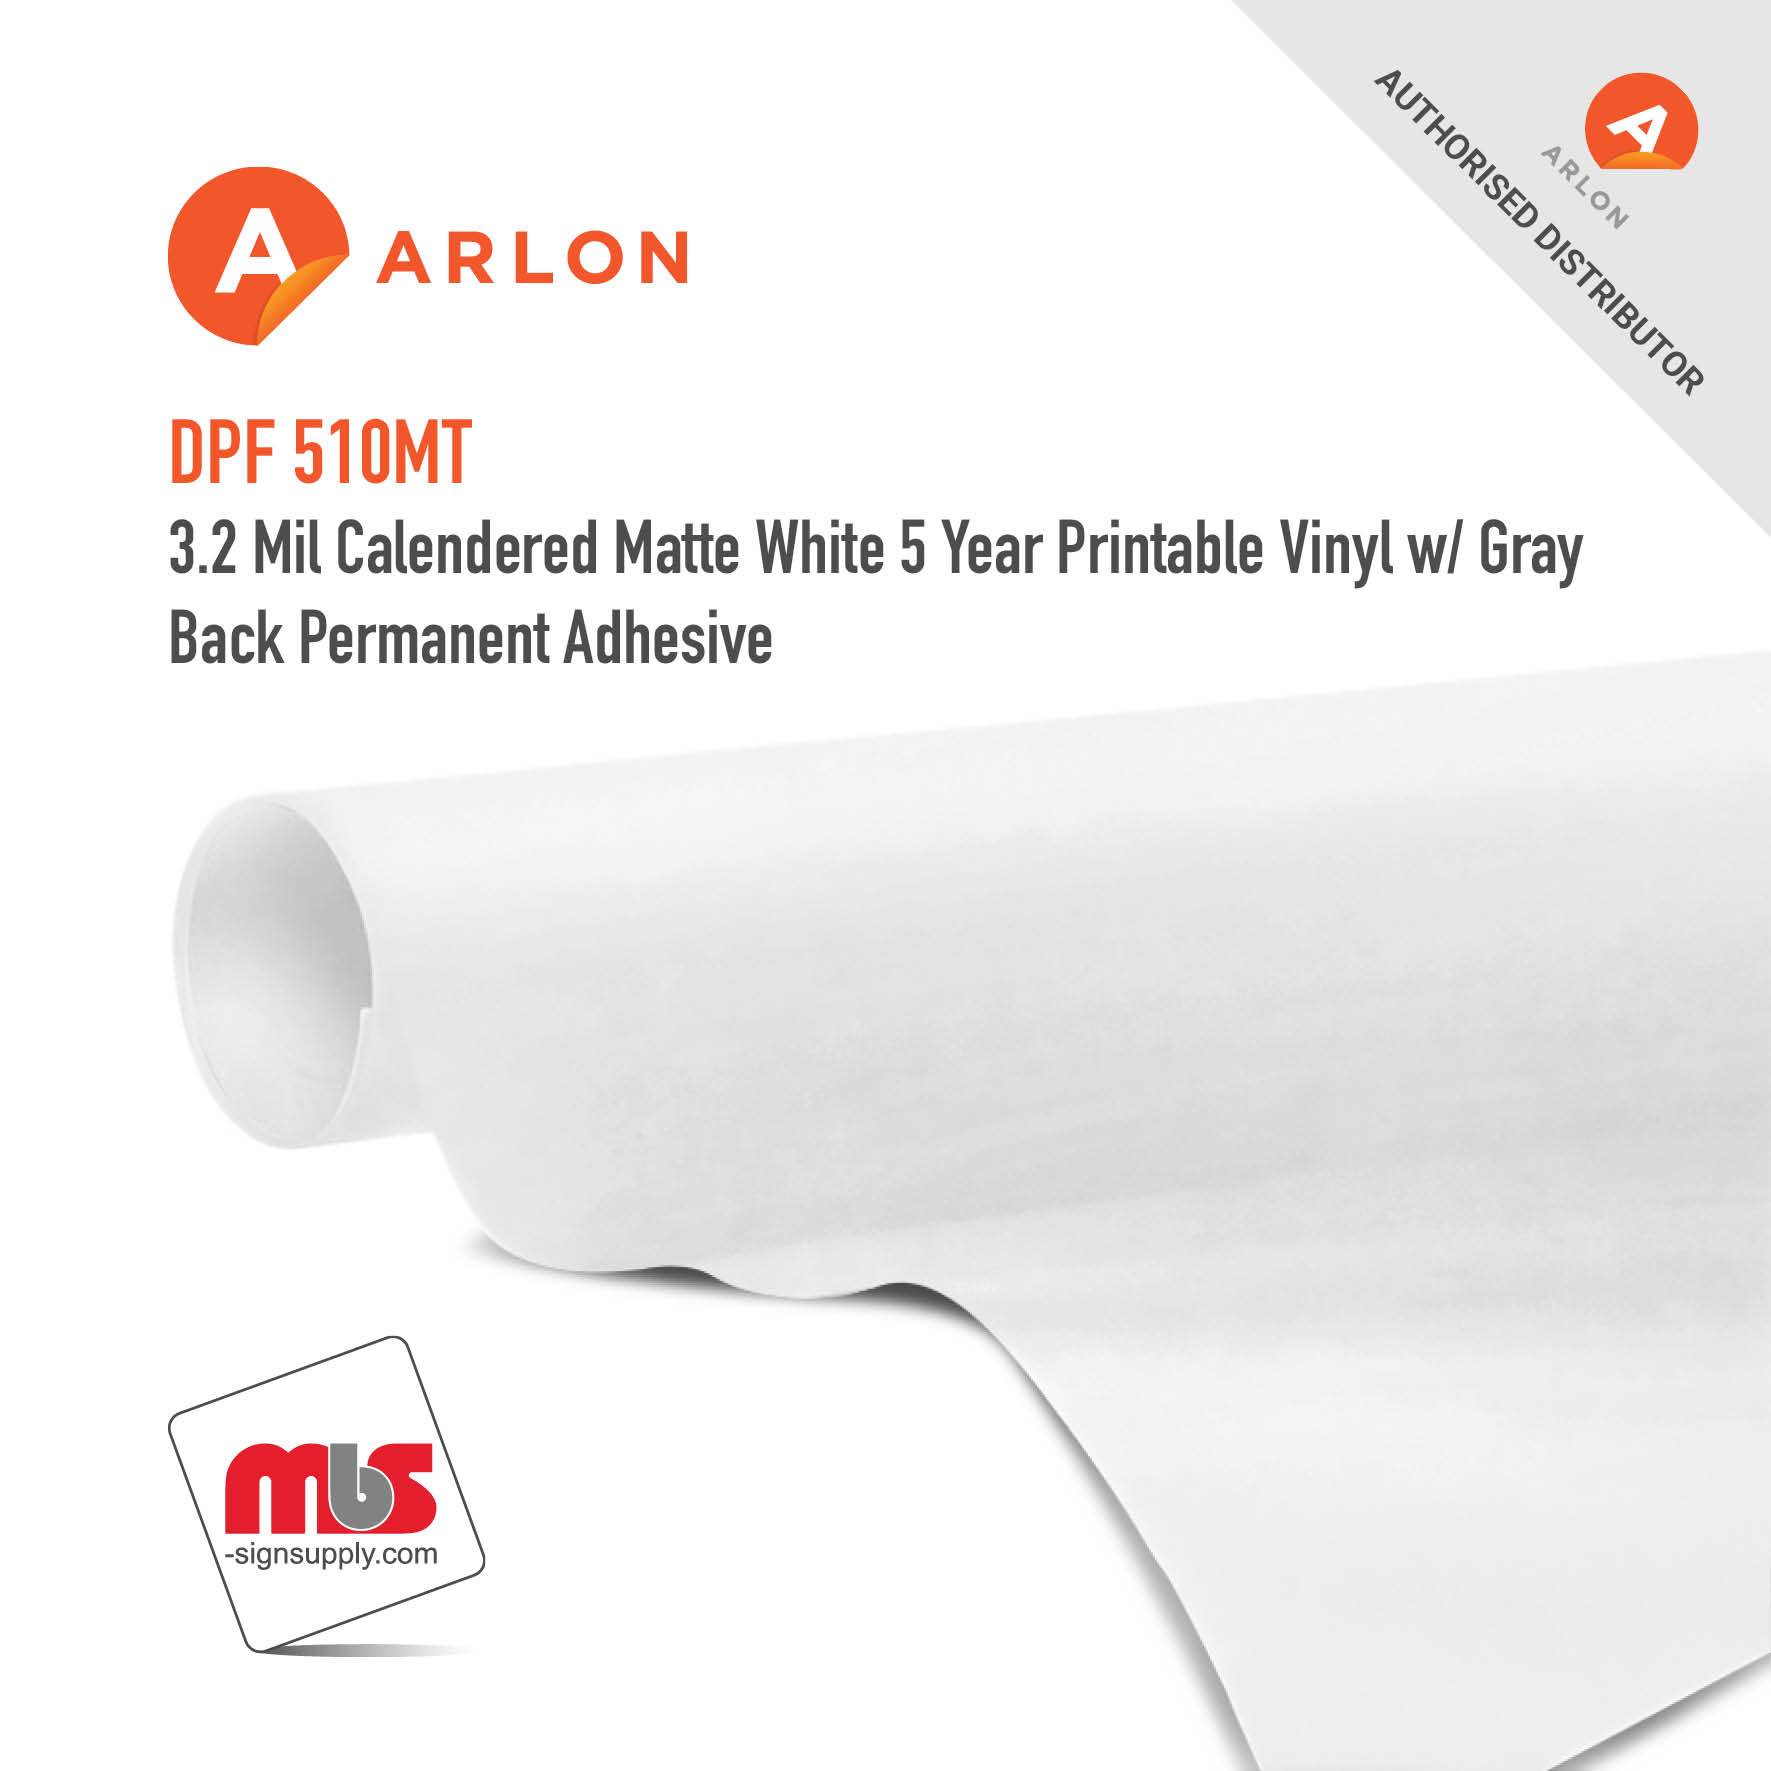 54'' x 50 Yard Roll - Arlon DPF 510MT 3.2 Mil Calendered Matte White 5 Year Printable Vinyl w/ Gray Back Permanent Adhesive